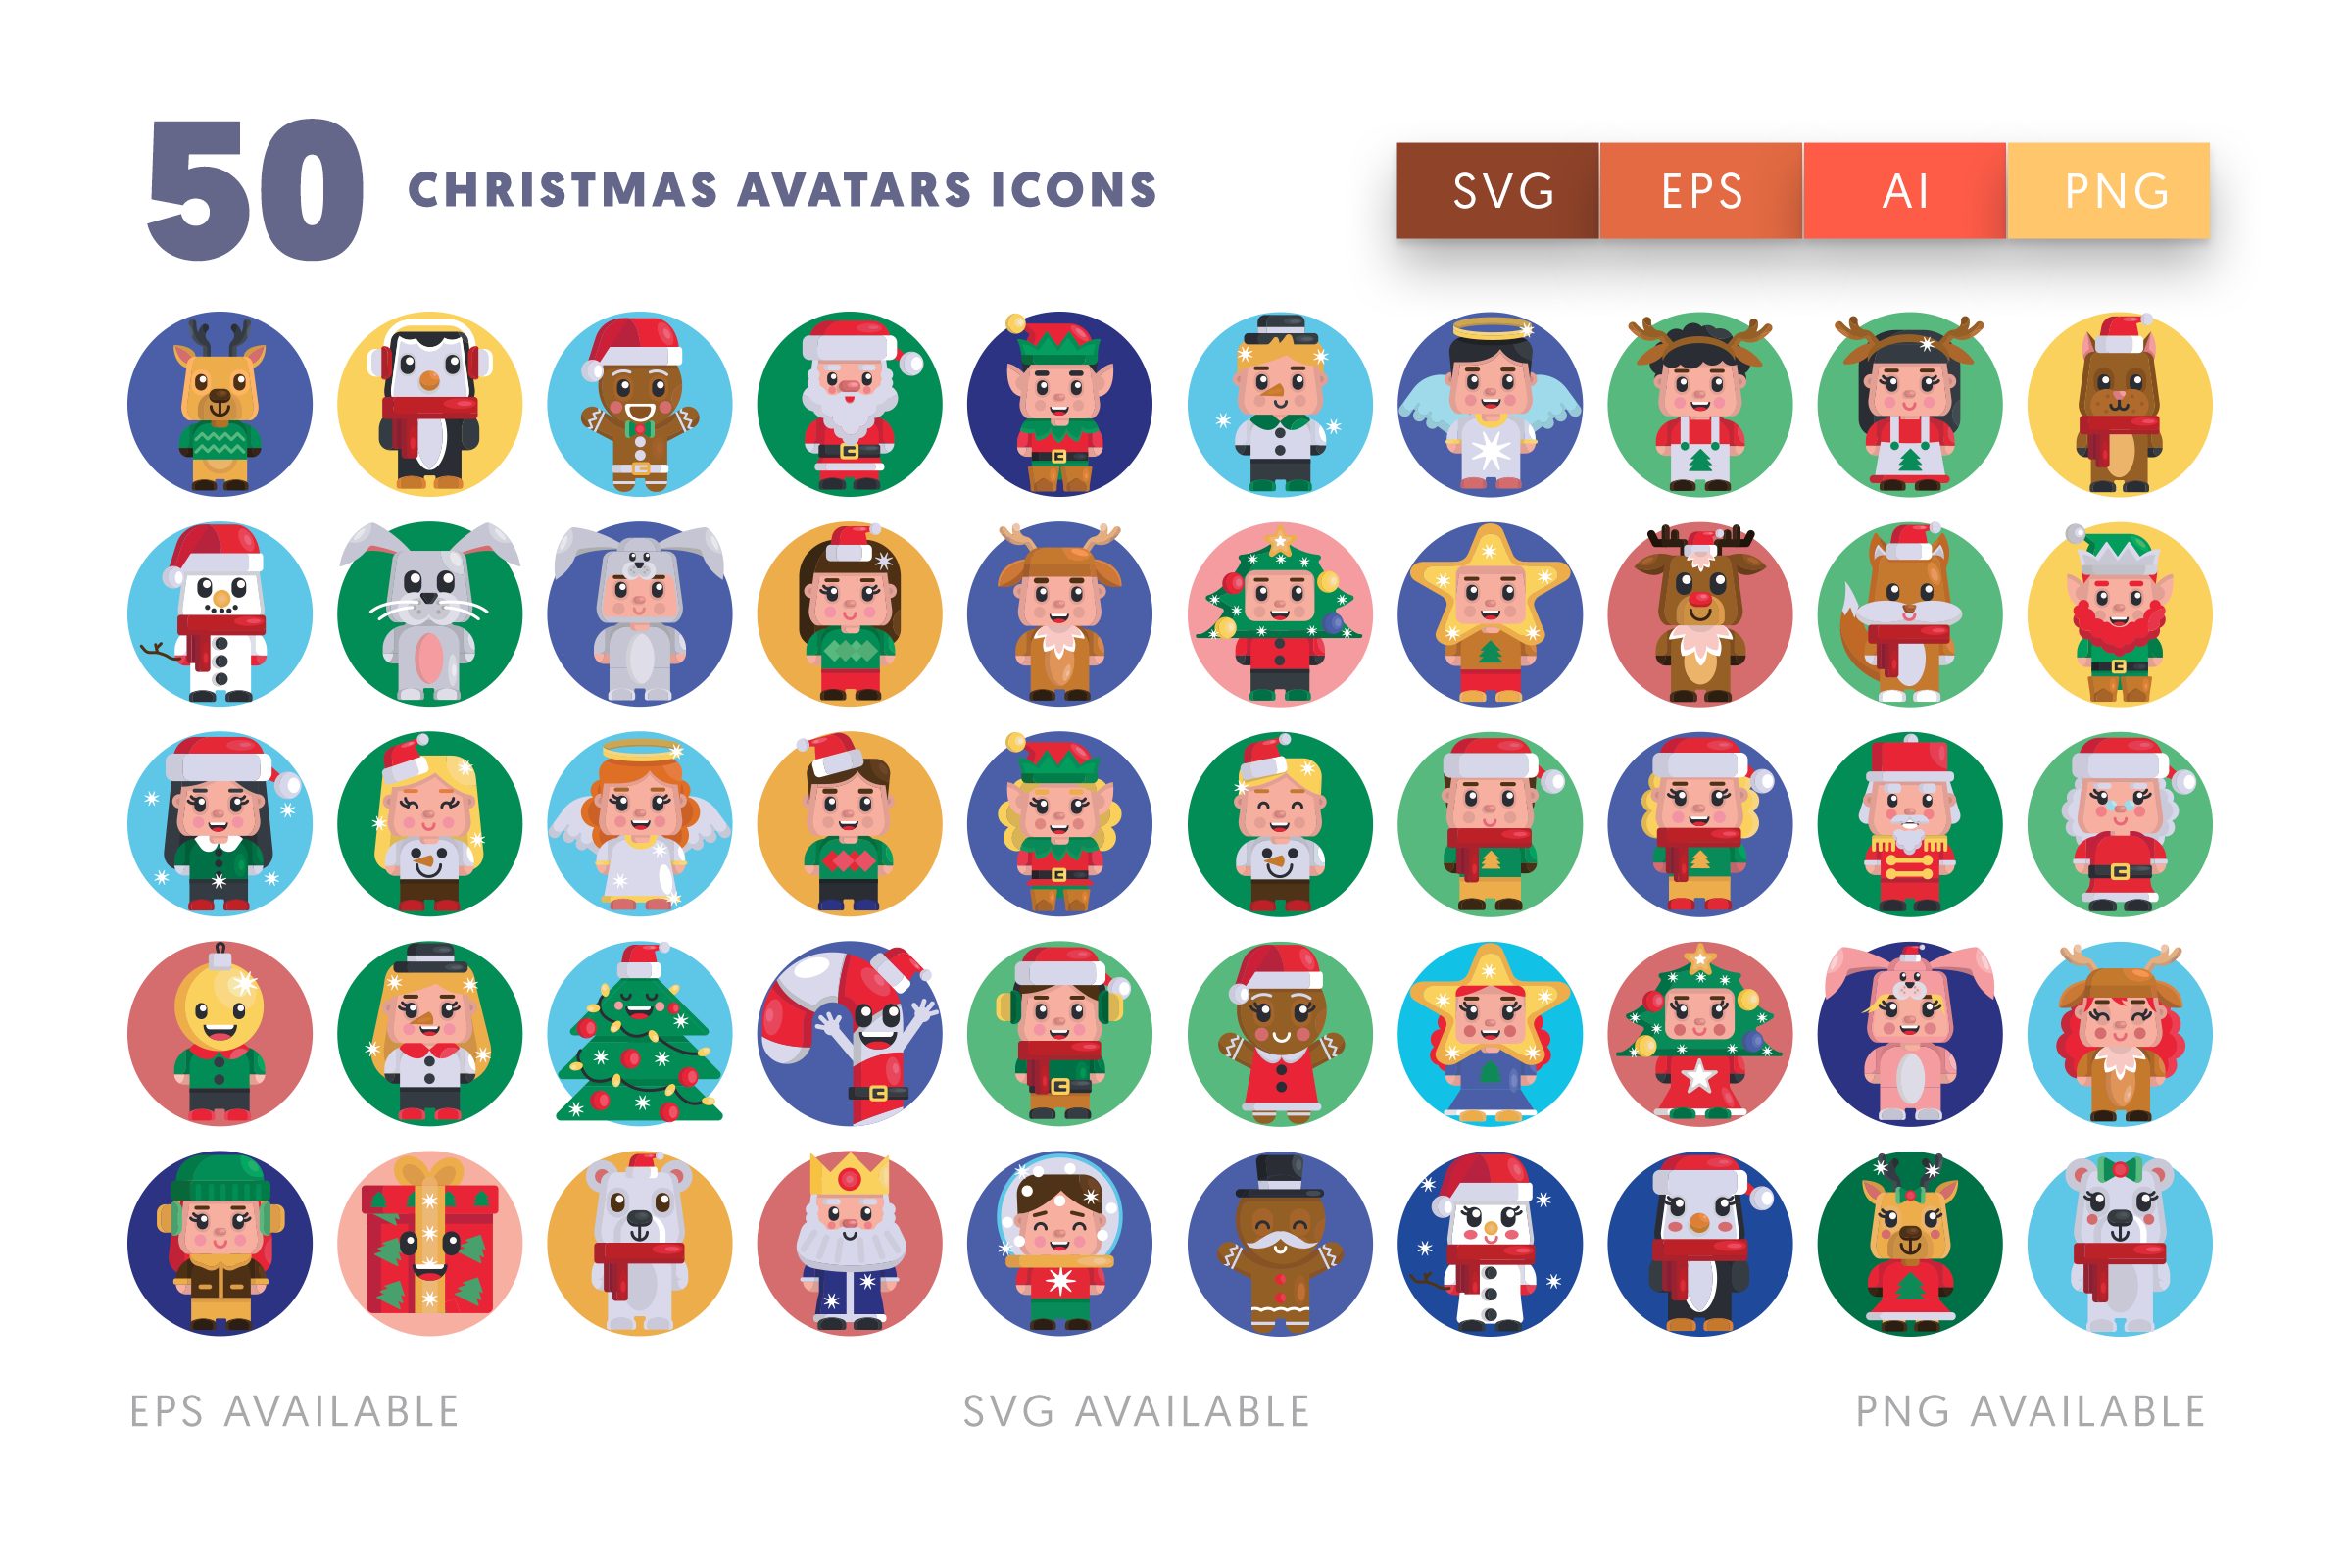 Christmas Avatars icons png/svg/eps